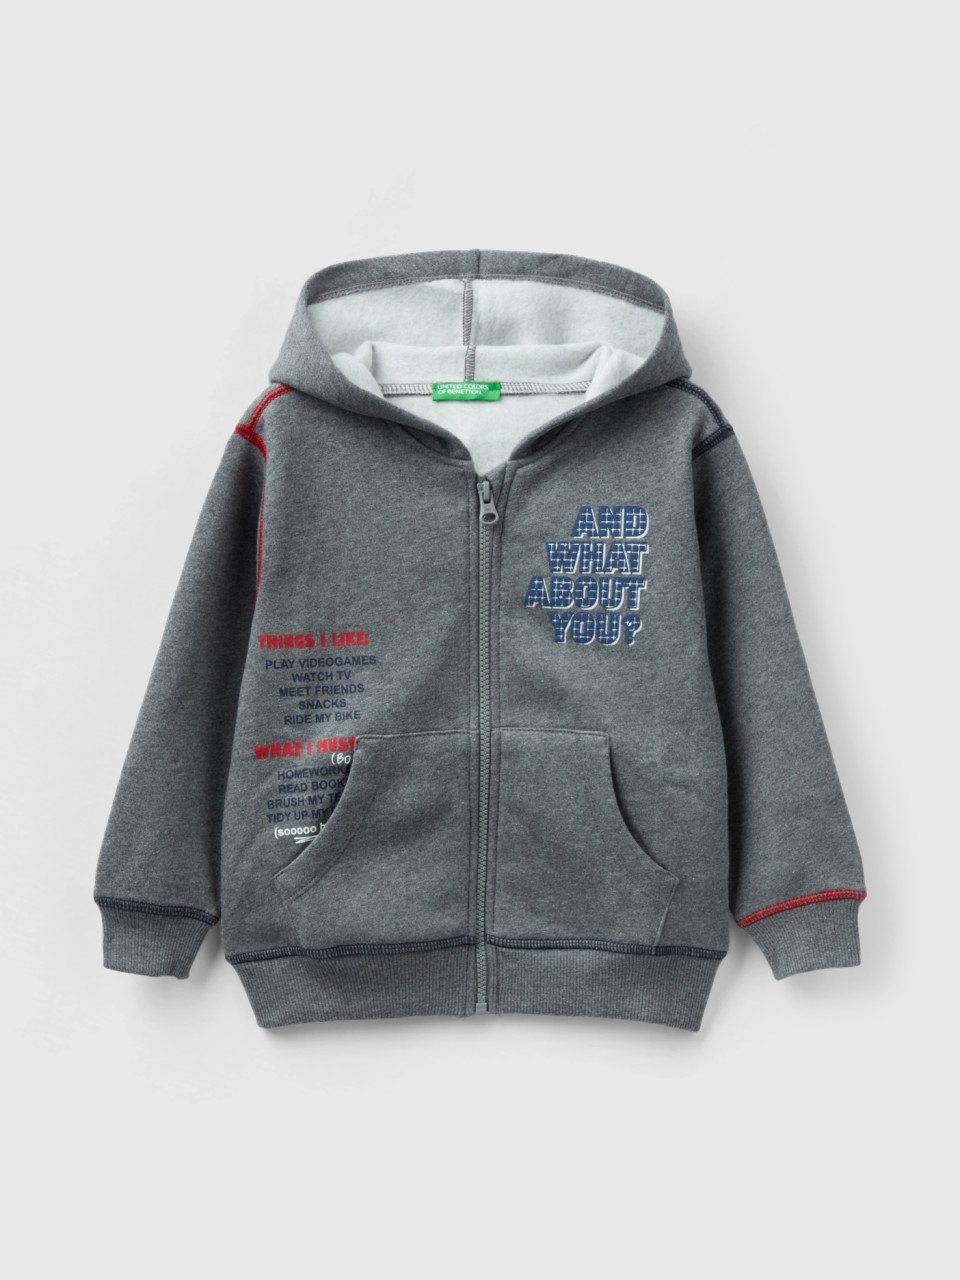 Benetton, Oversized Sweatshirt With Hood And Print, Dark Gray, Kids